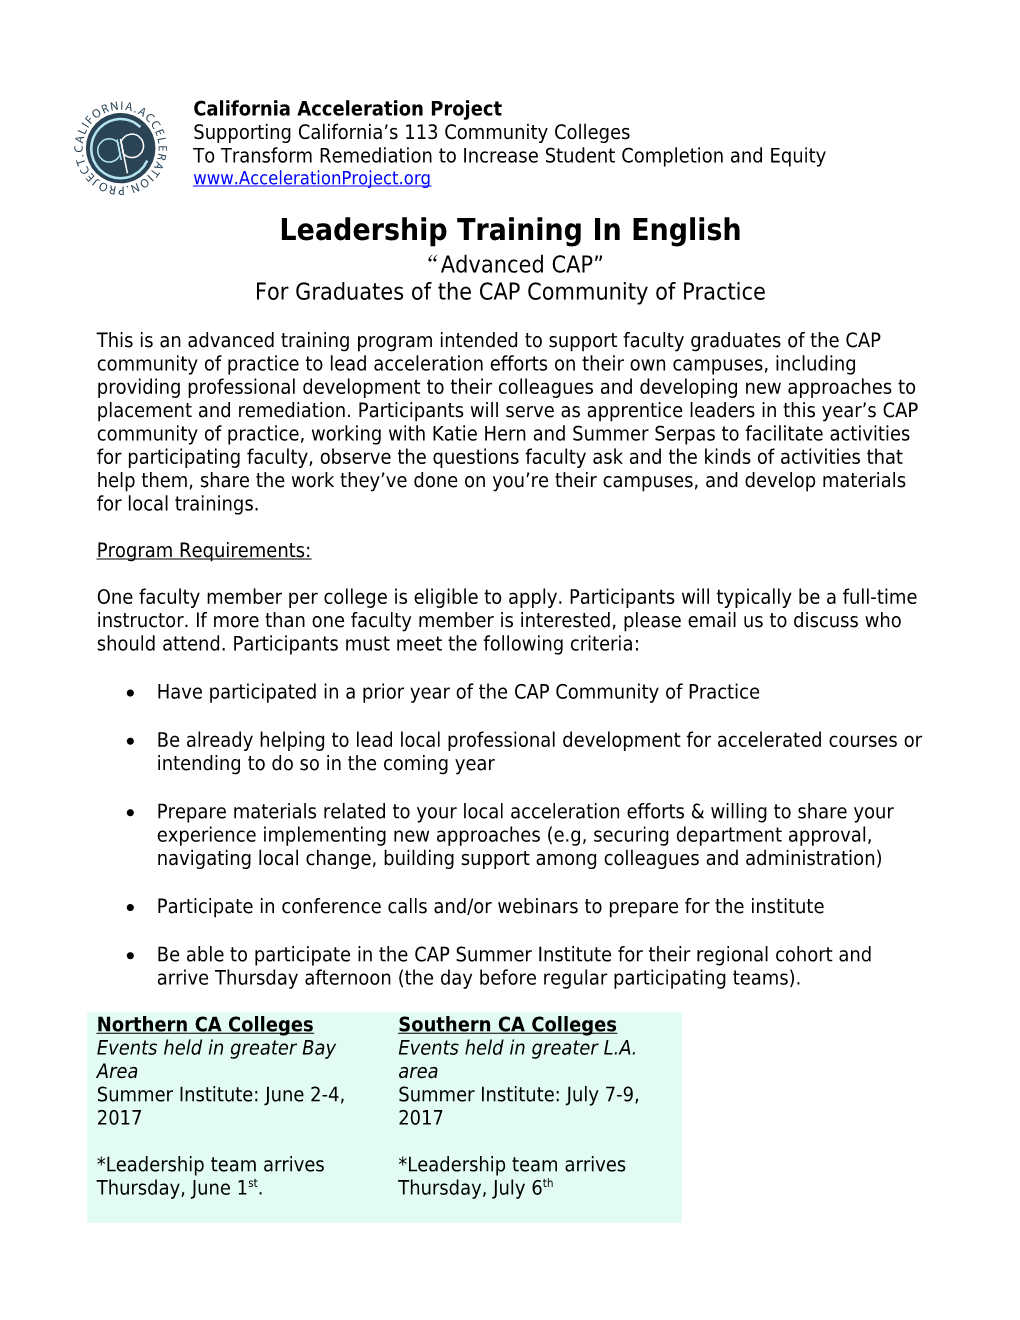 Leadership Training in English